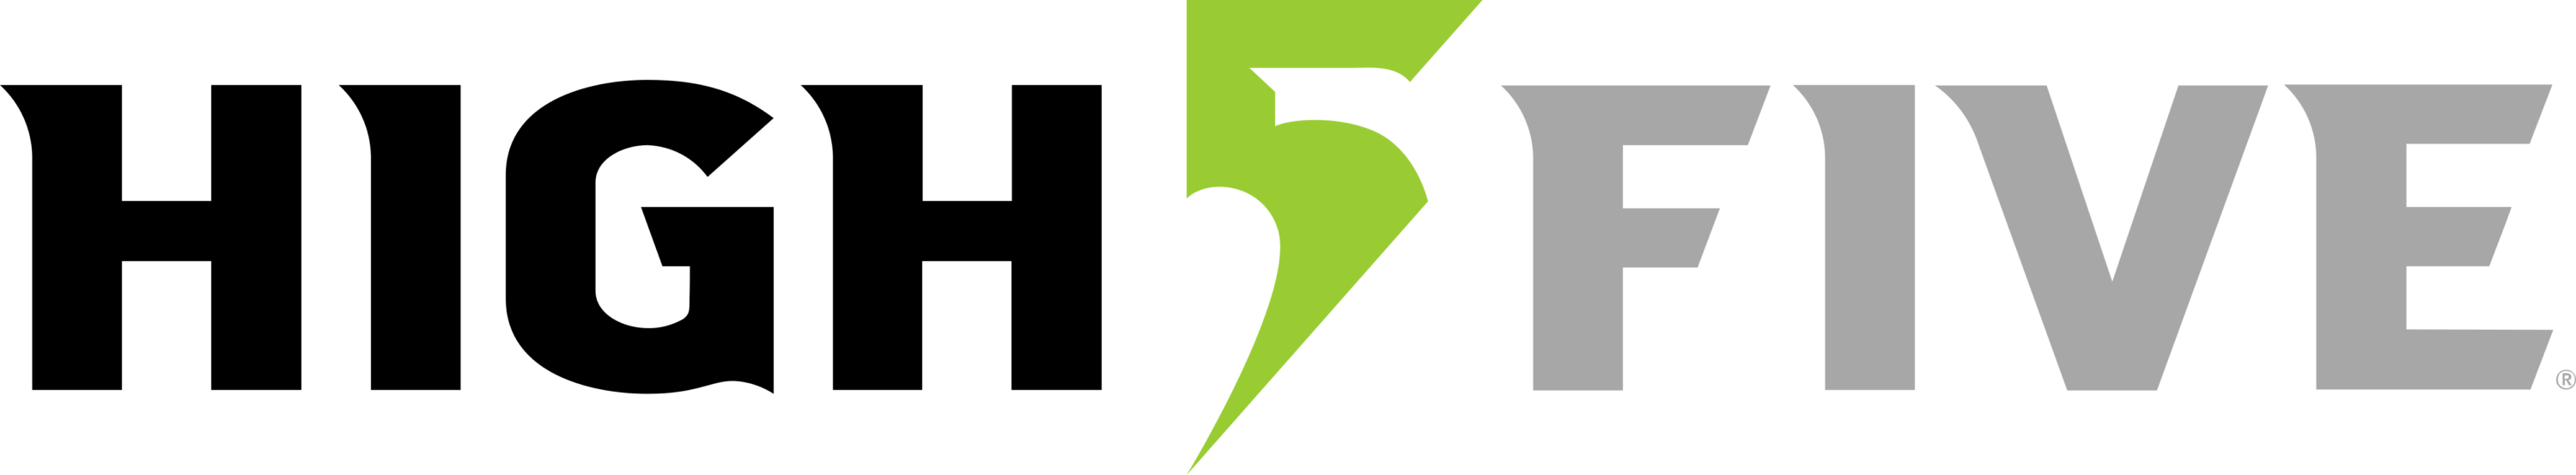 High Five Sportswear Logo